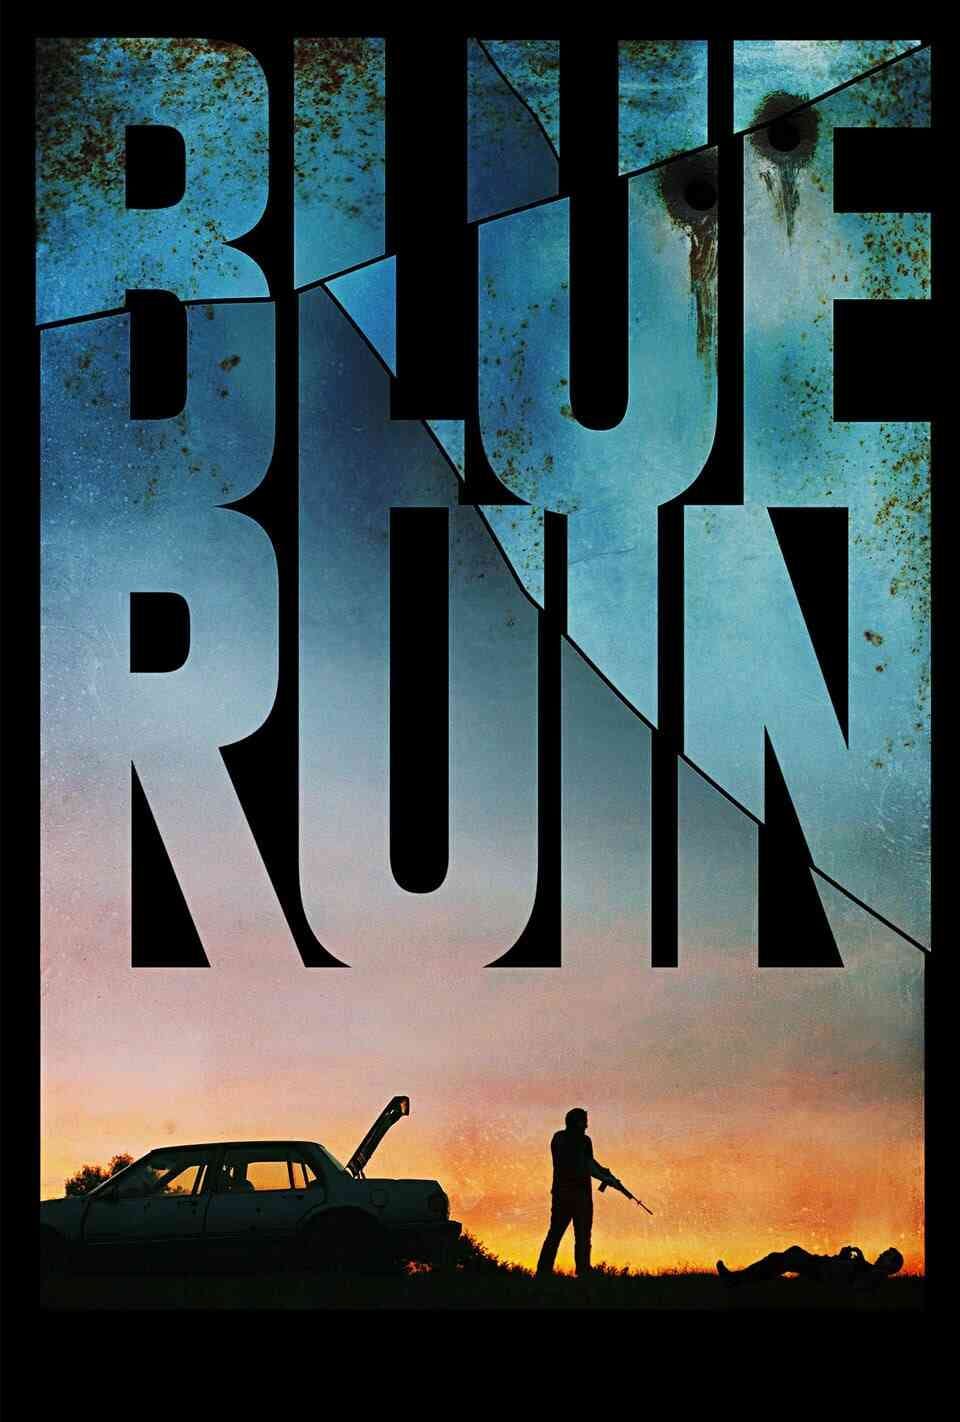 Read Blue Ruin screenplay (poster)